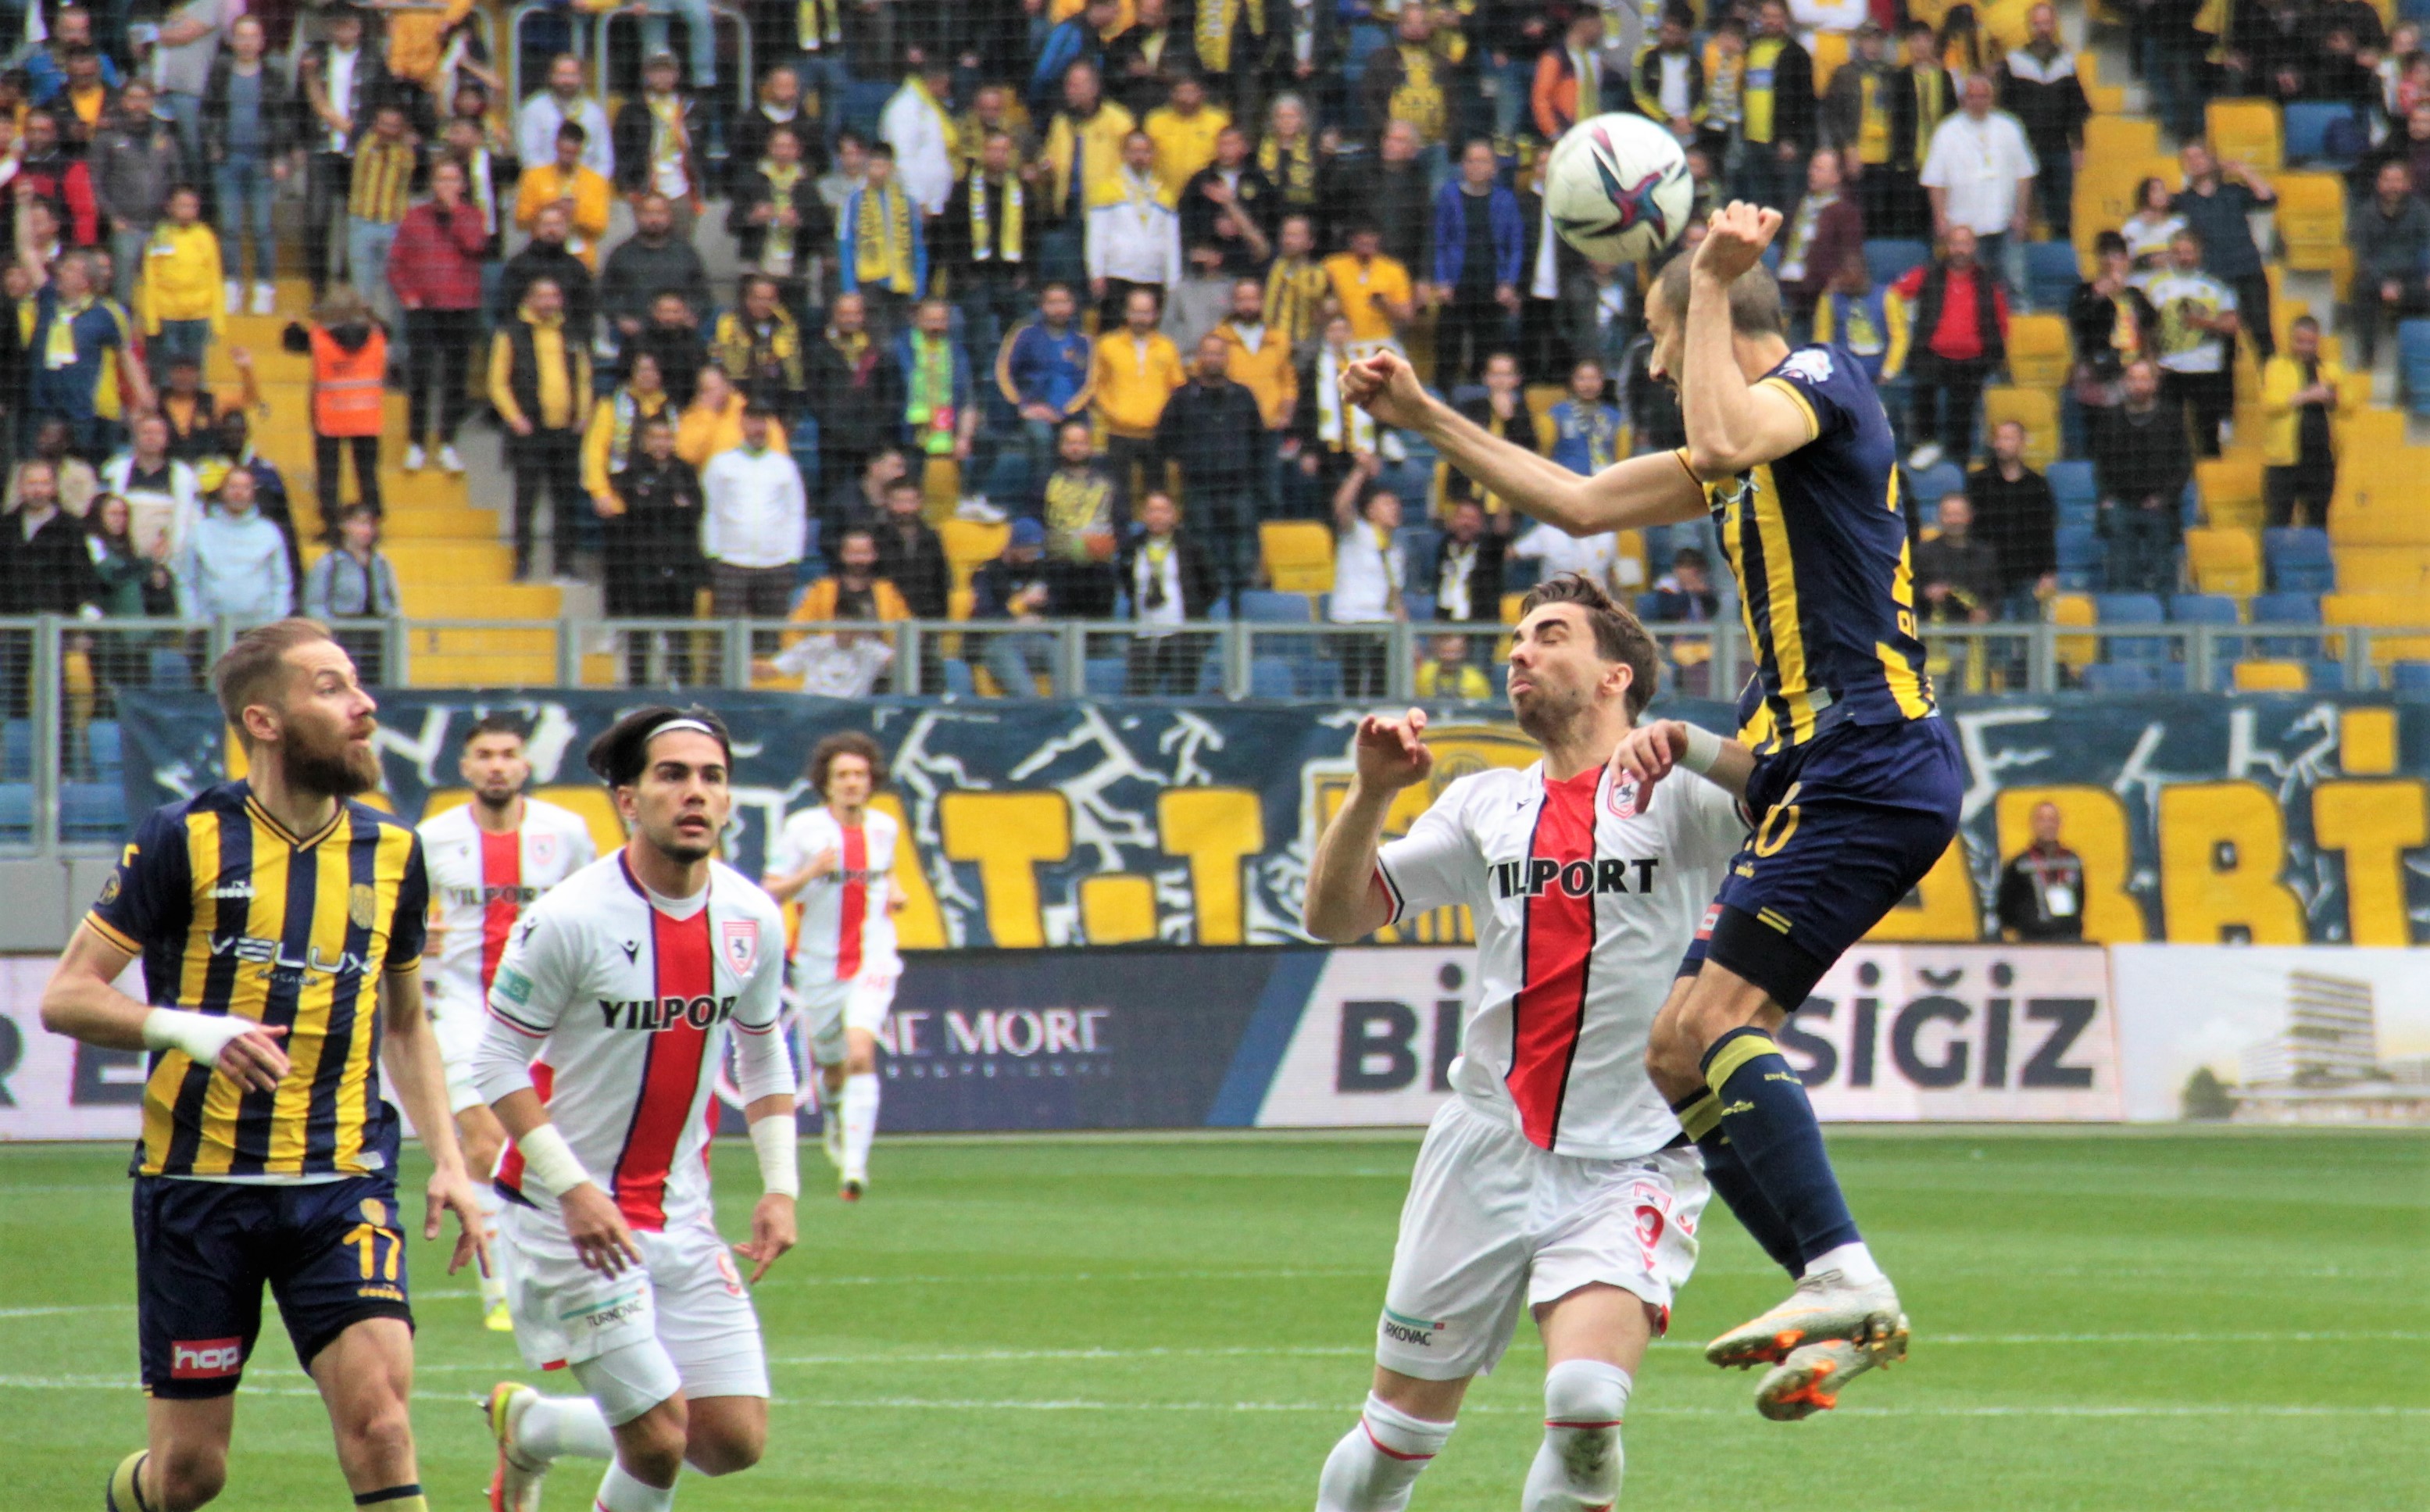 Ankaragücü Süper Lig'e yükselmeyi başardı!